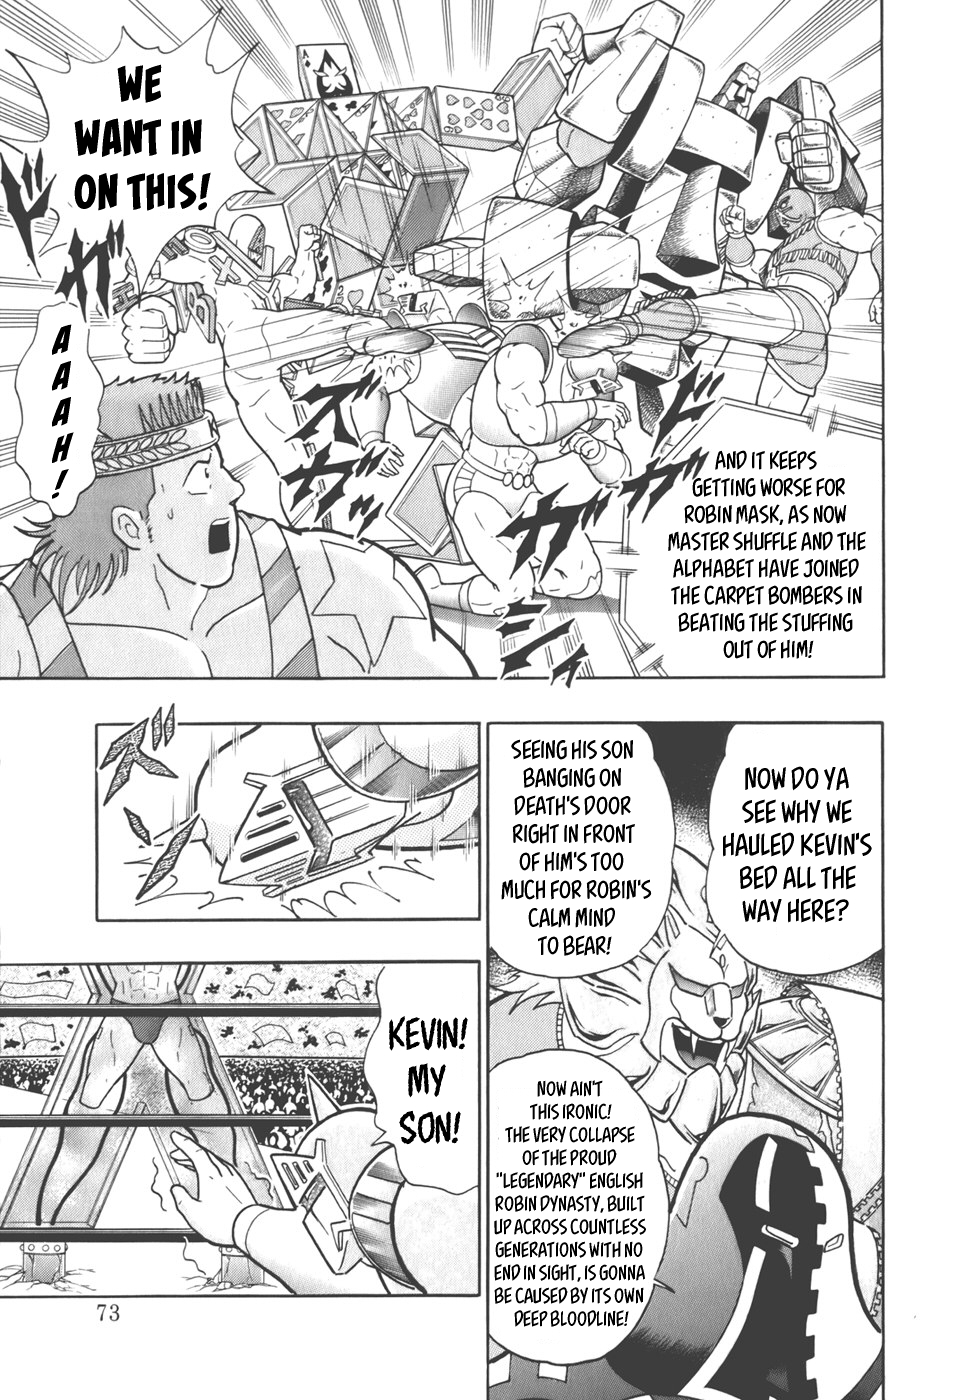 Kinnikuman II Sei: Kyuukyoku Choujin Tag Hen Vol. 4 Ch. 37 A New Generation United Front to Save Kevin!